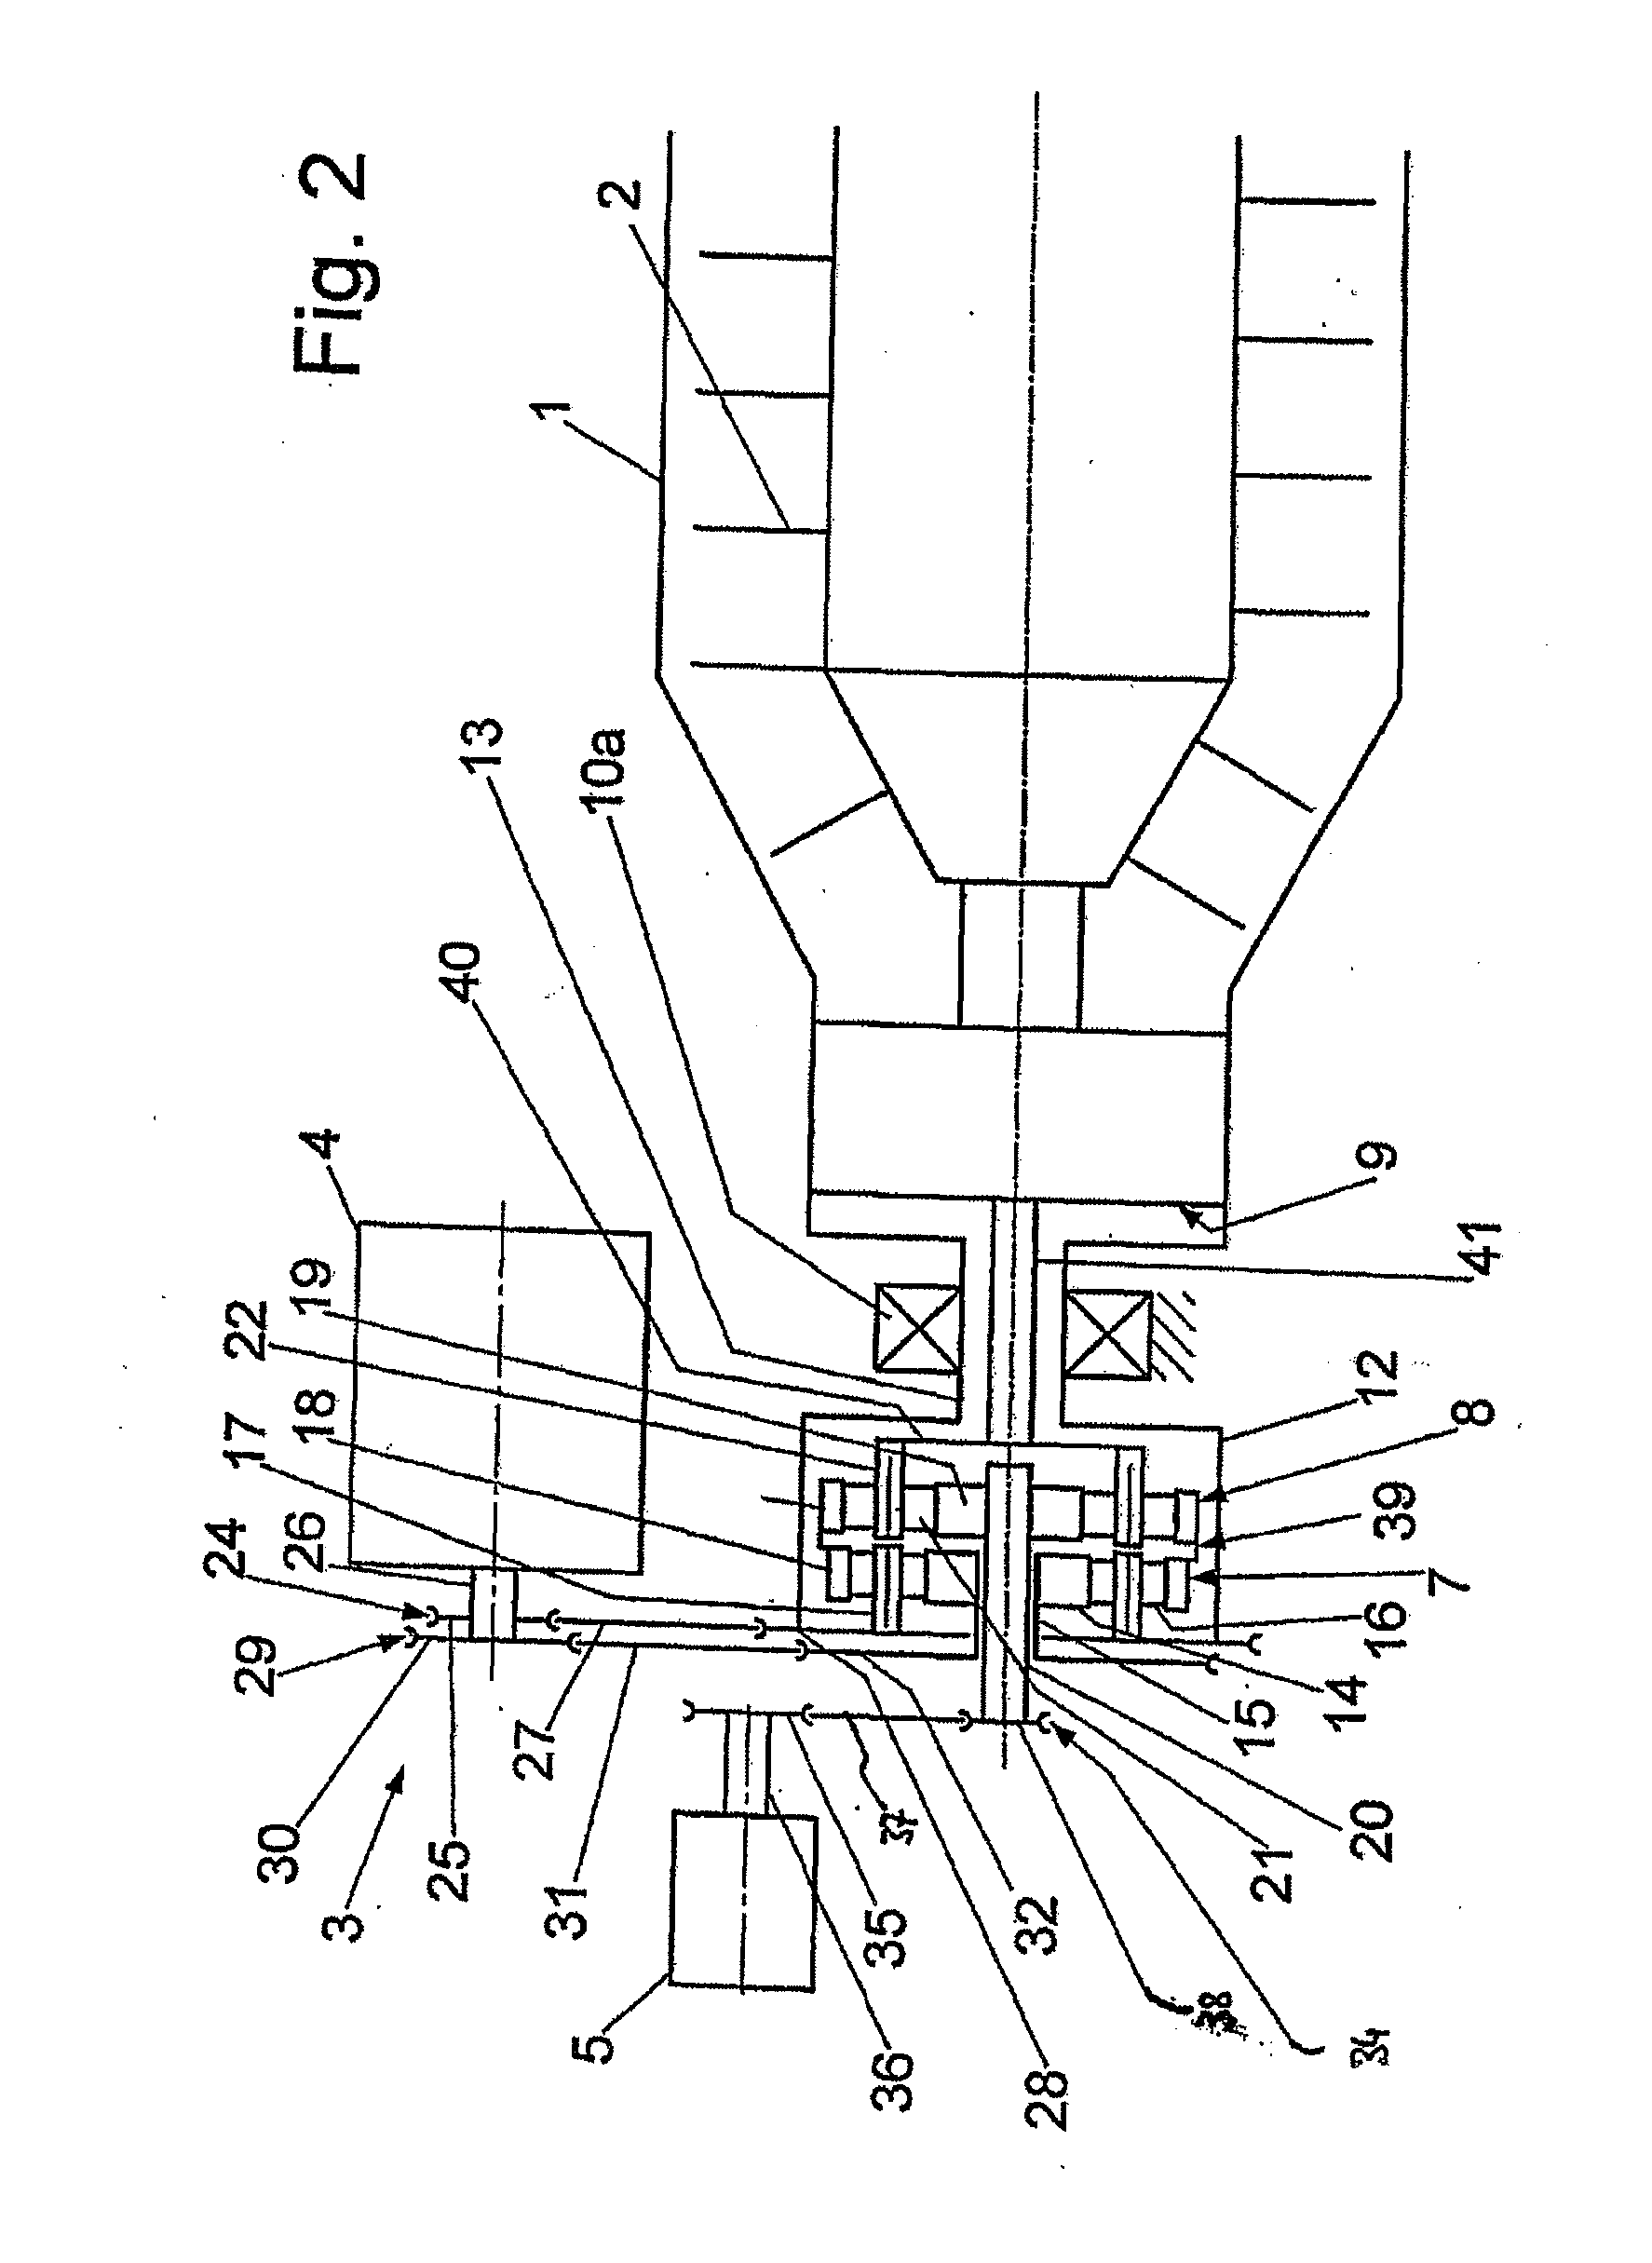 Helical conveyor centrifuge having a drive device